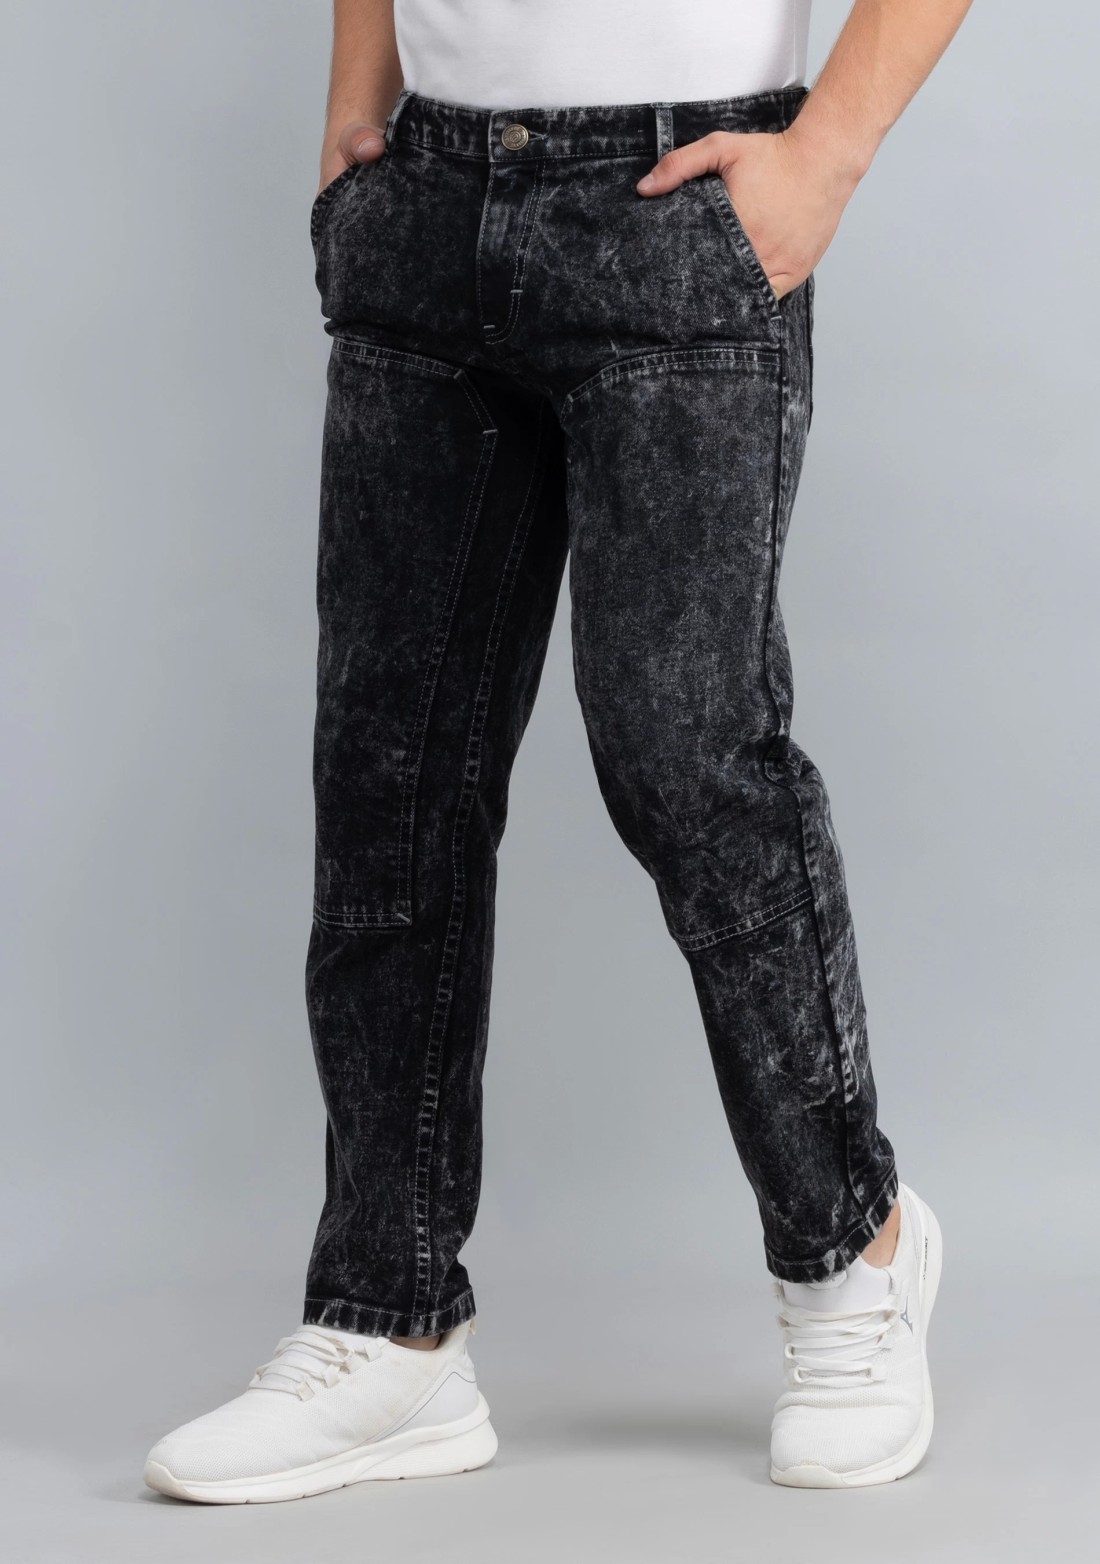 Black Straight Fit Rhysley Men's Cotton Jeans